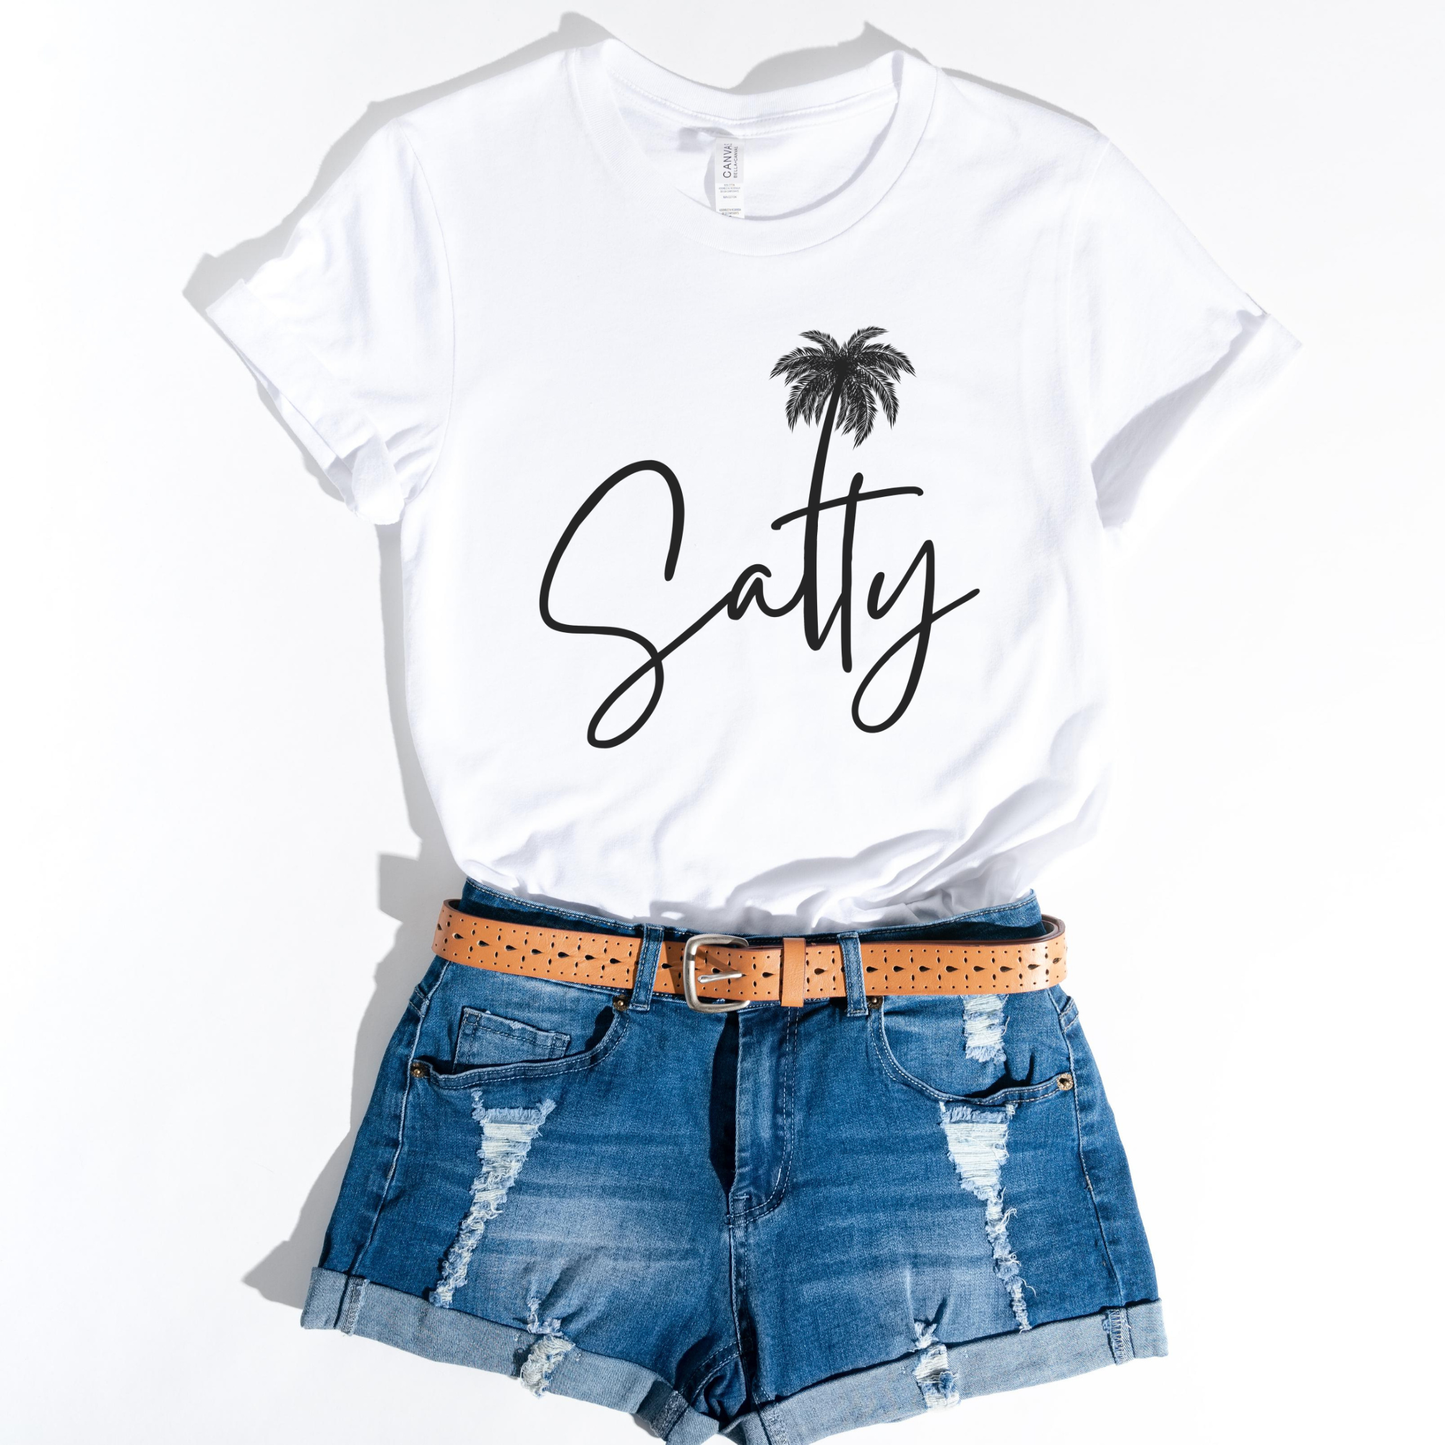 Trendznmore - Salty Beach Graphic T-Shirt: Small / Stonewash Blue $38